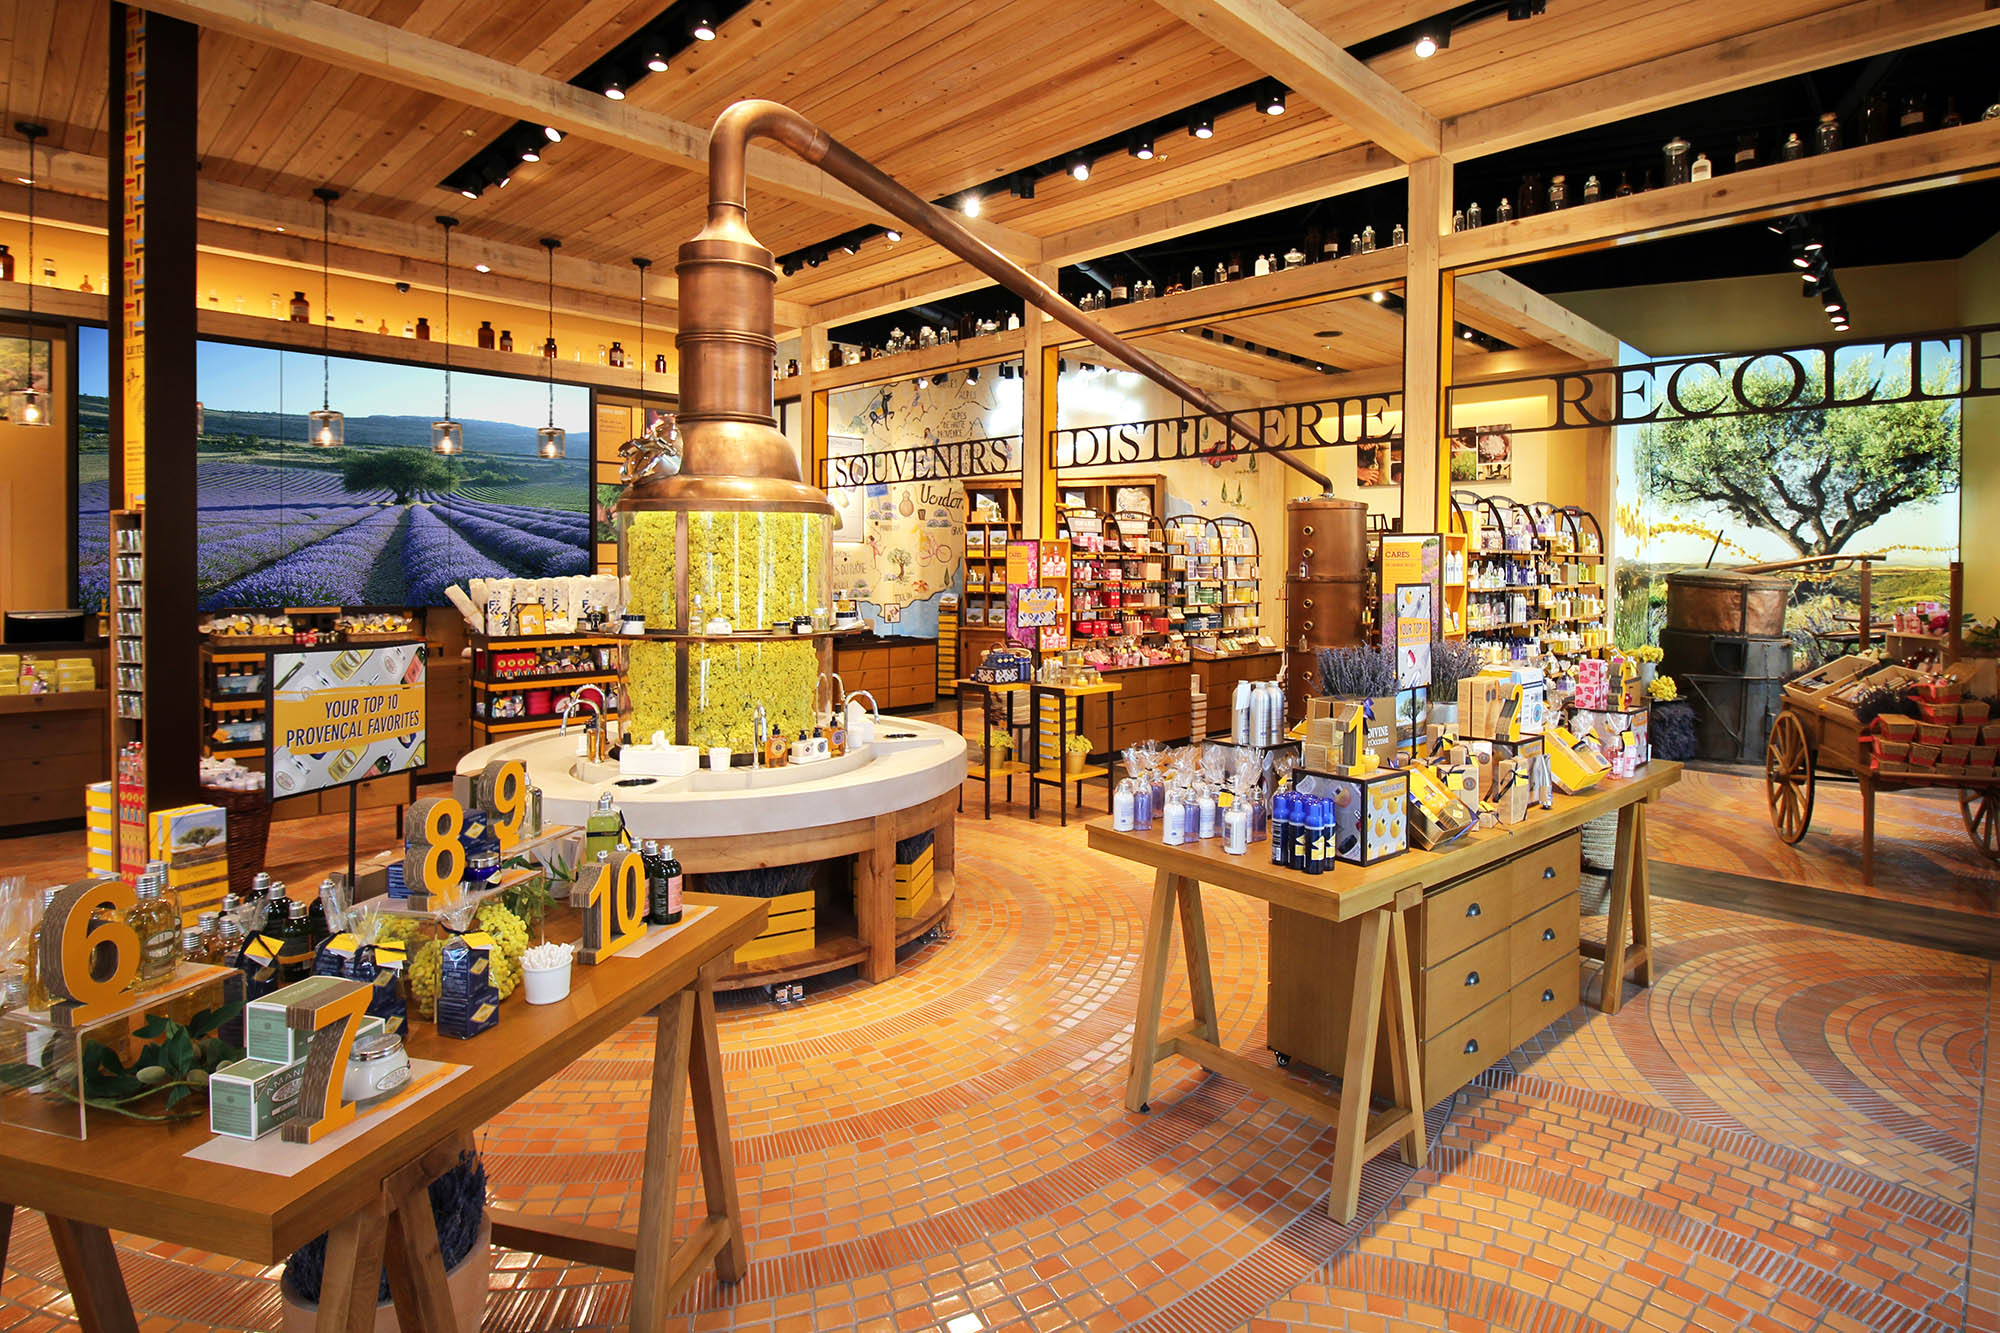  The L'Occitane store in Disney Springs